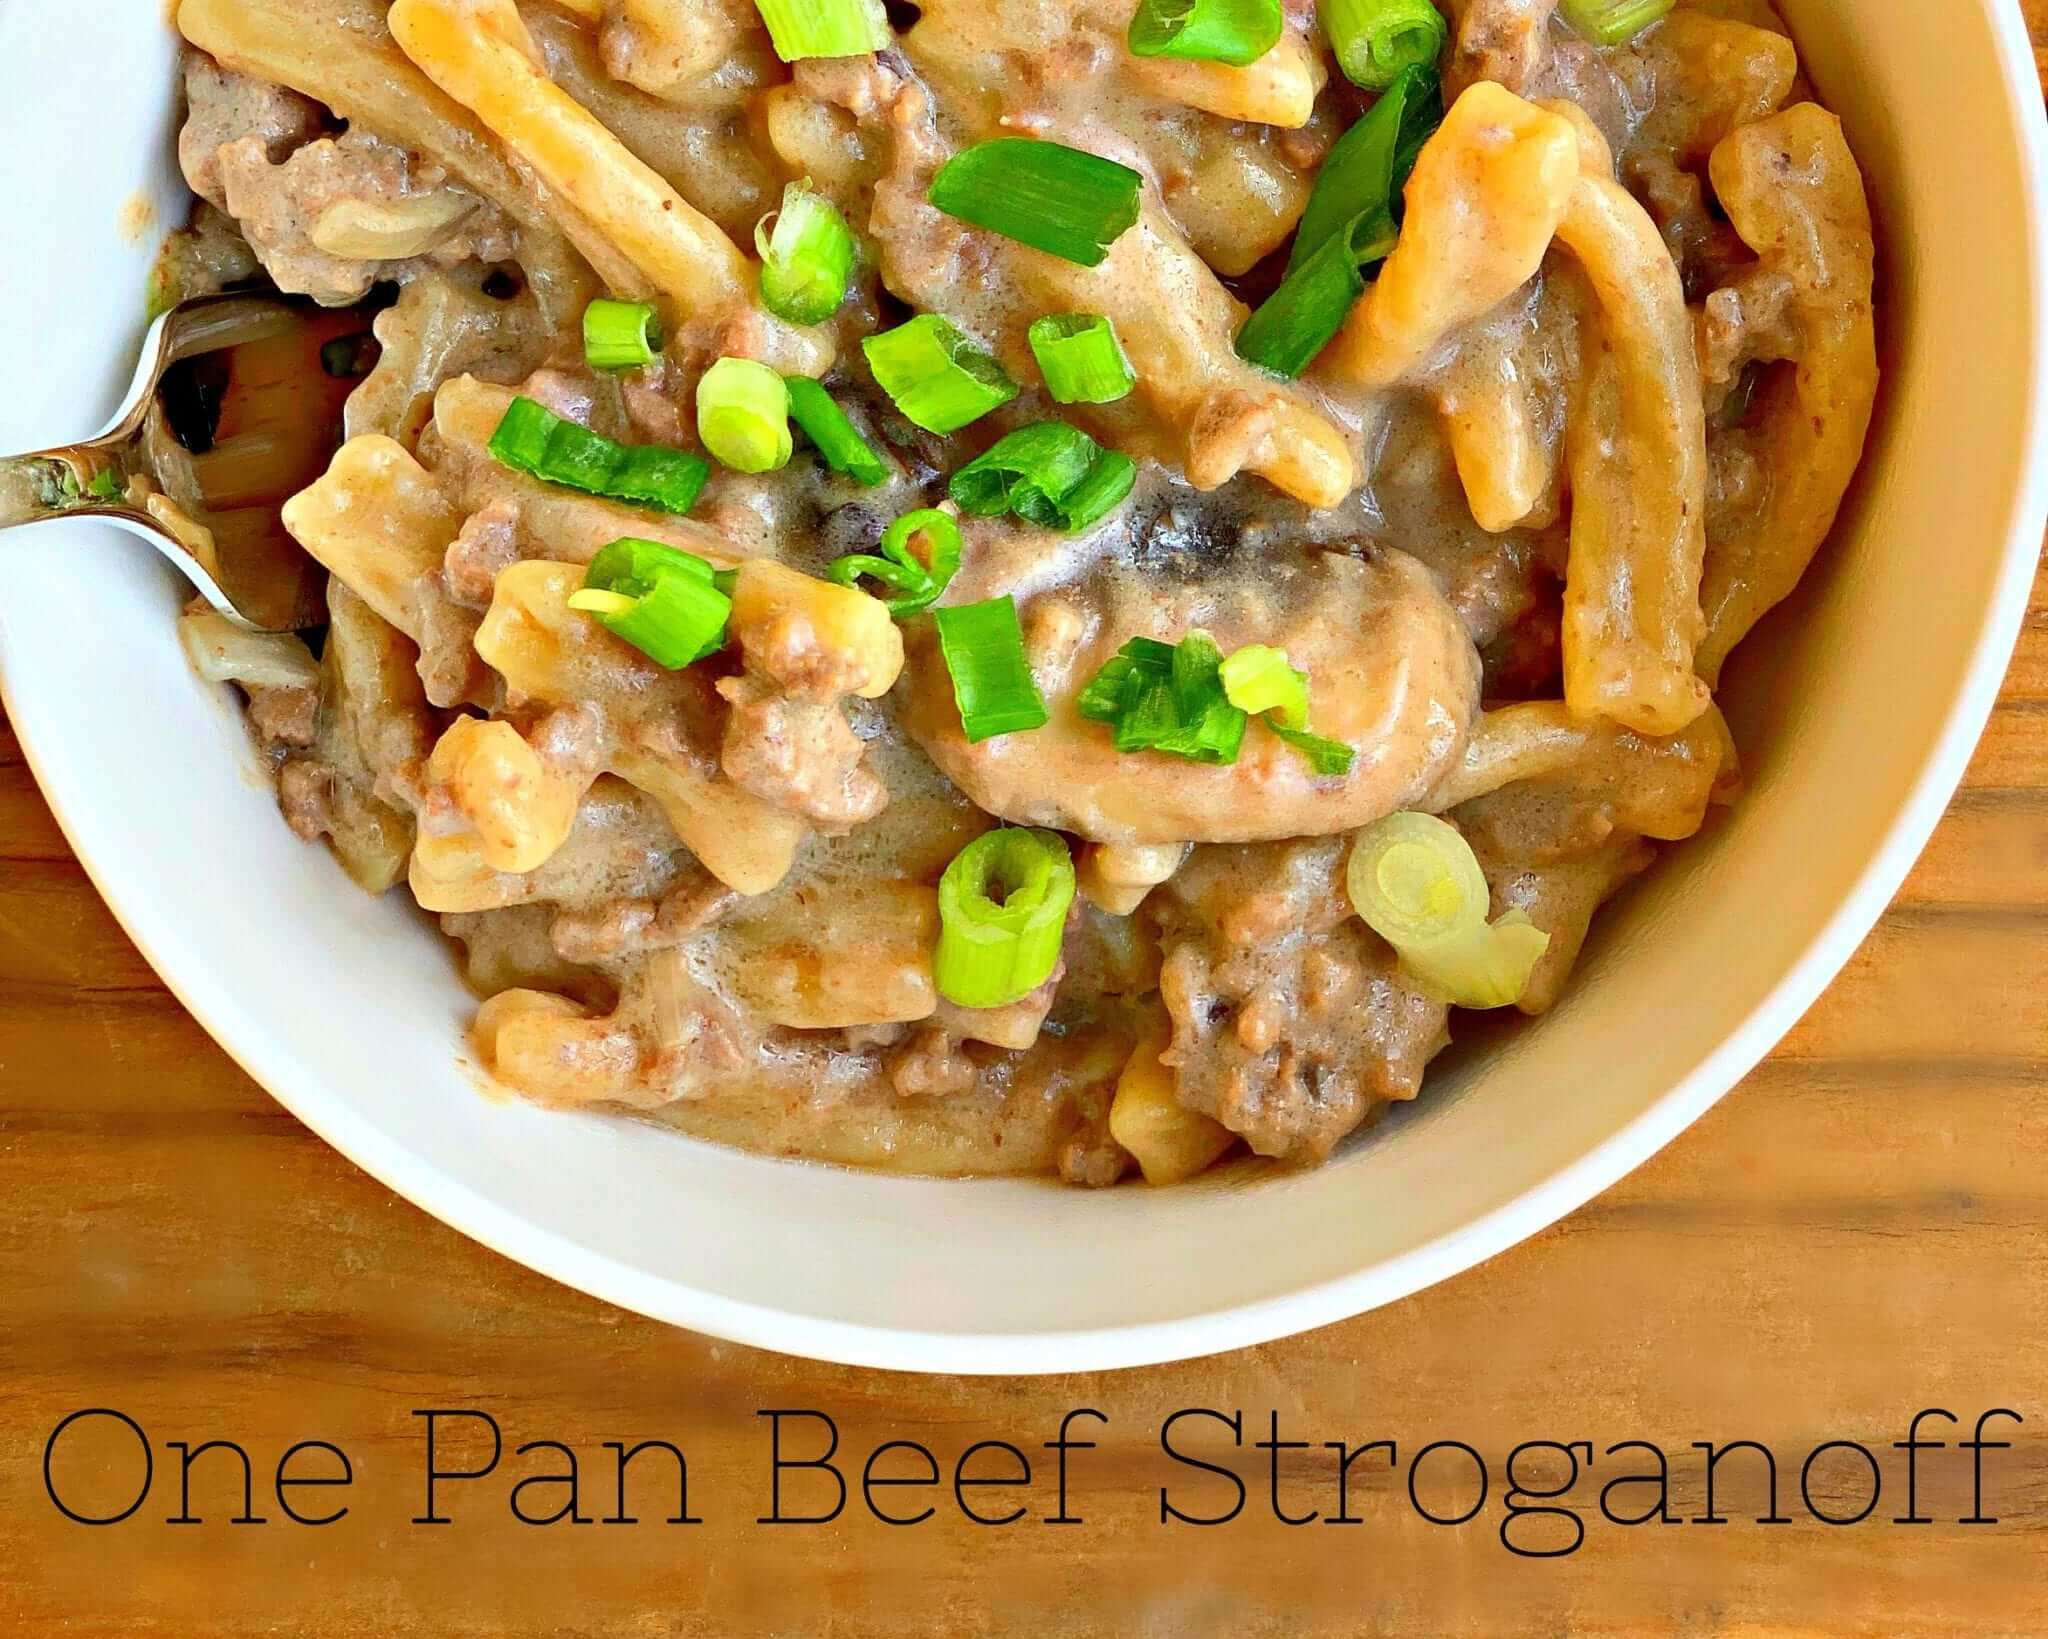 One Pan Beef Stroganoff